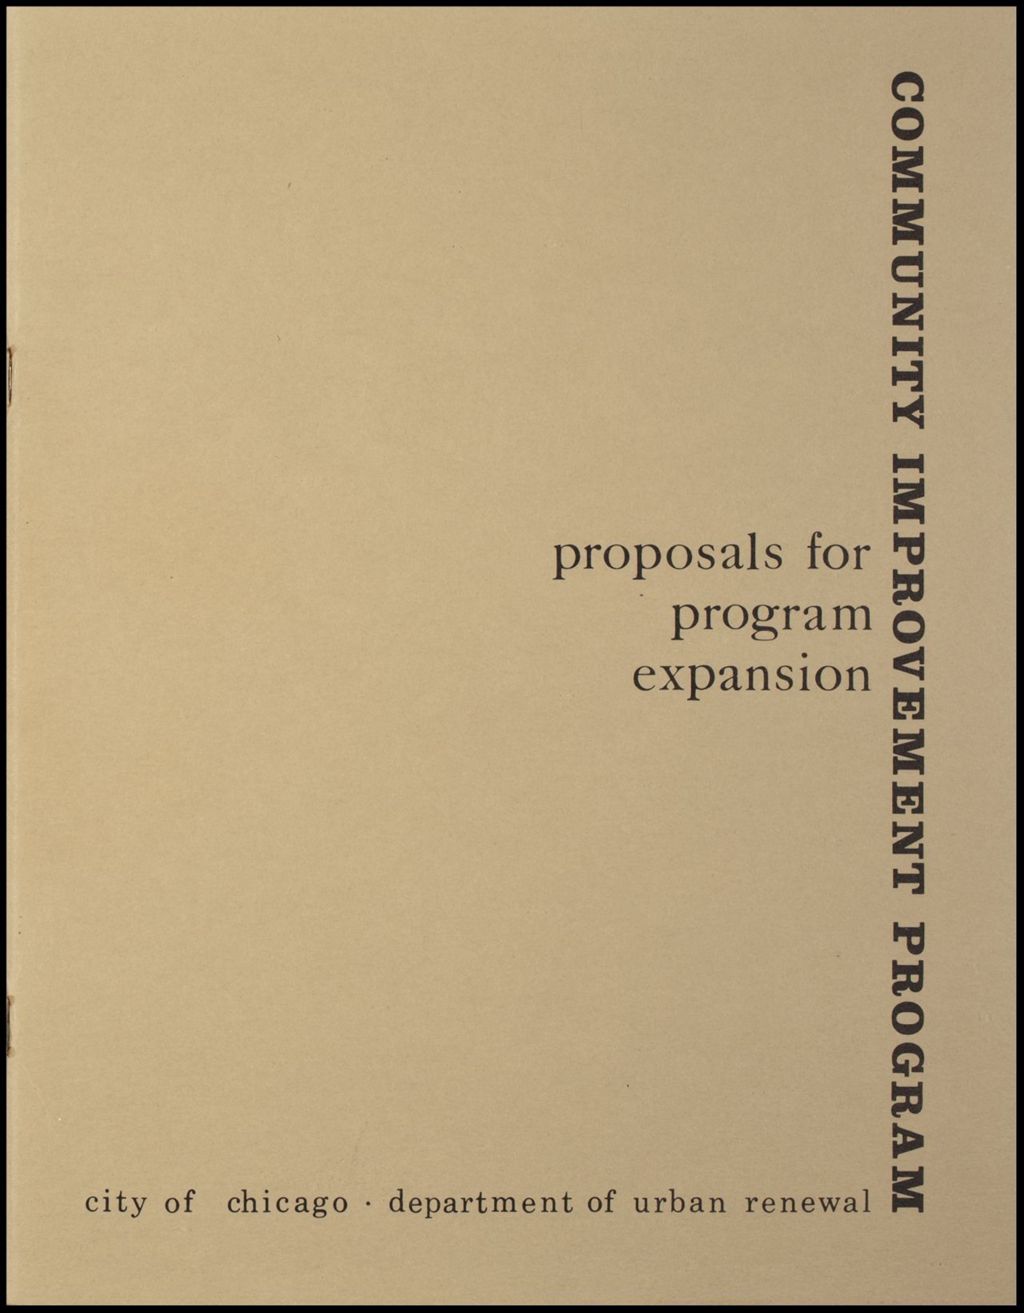 Miniature of City of Chicago Community Improvement Program, 1967 (Folder III-1821)